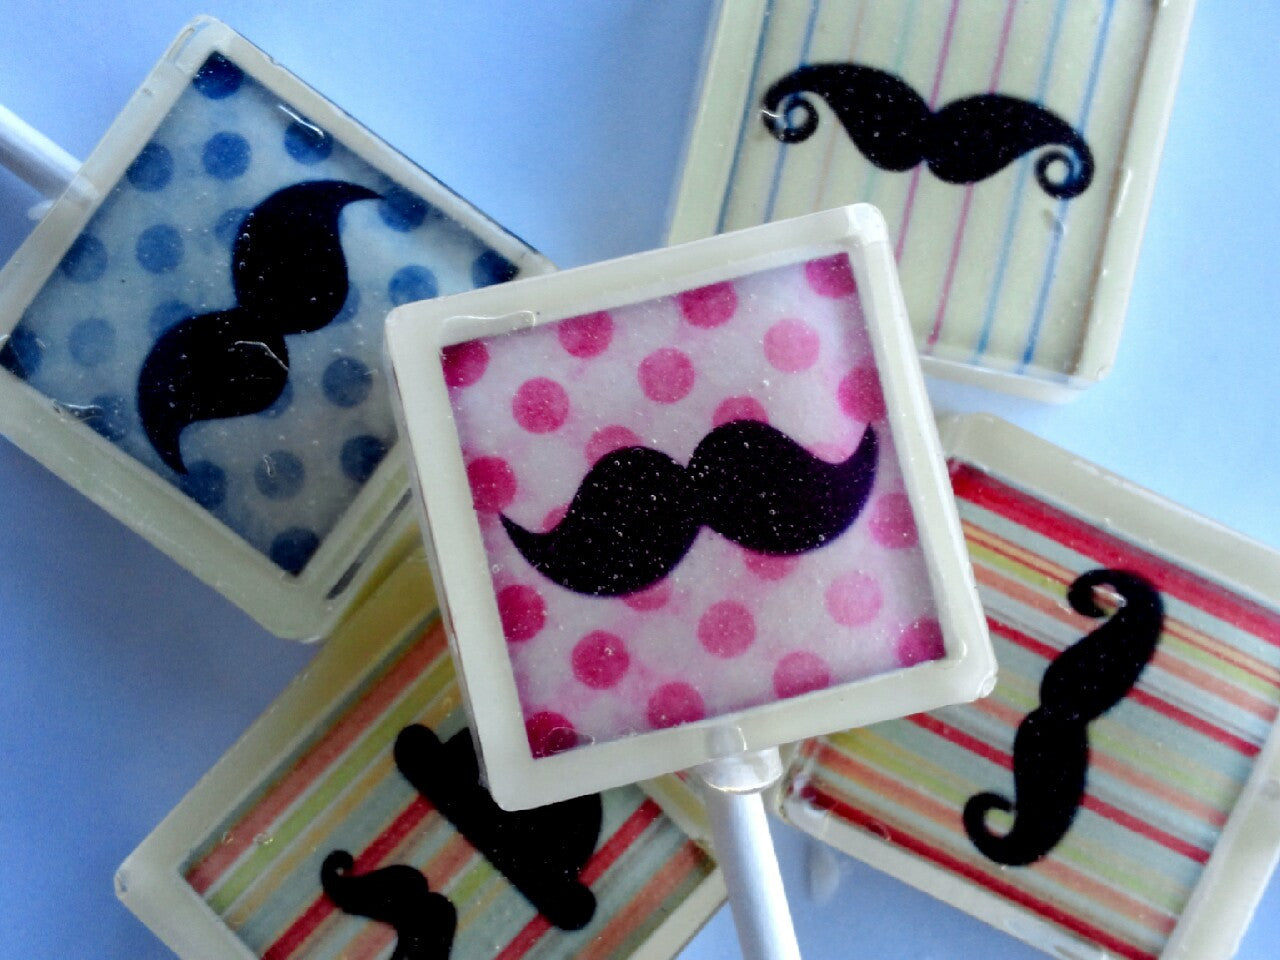 Mustache Lollipops 5-piece set by I Want Candy!